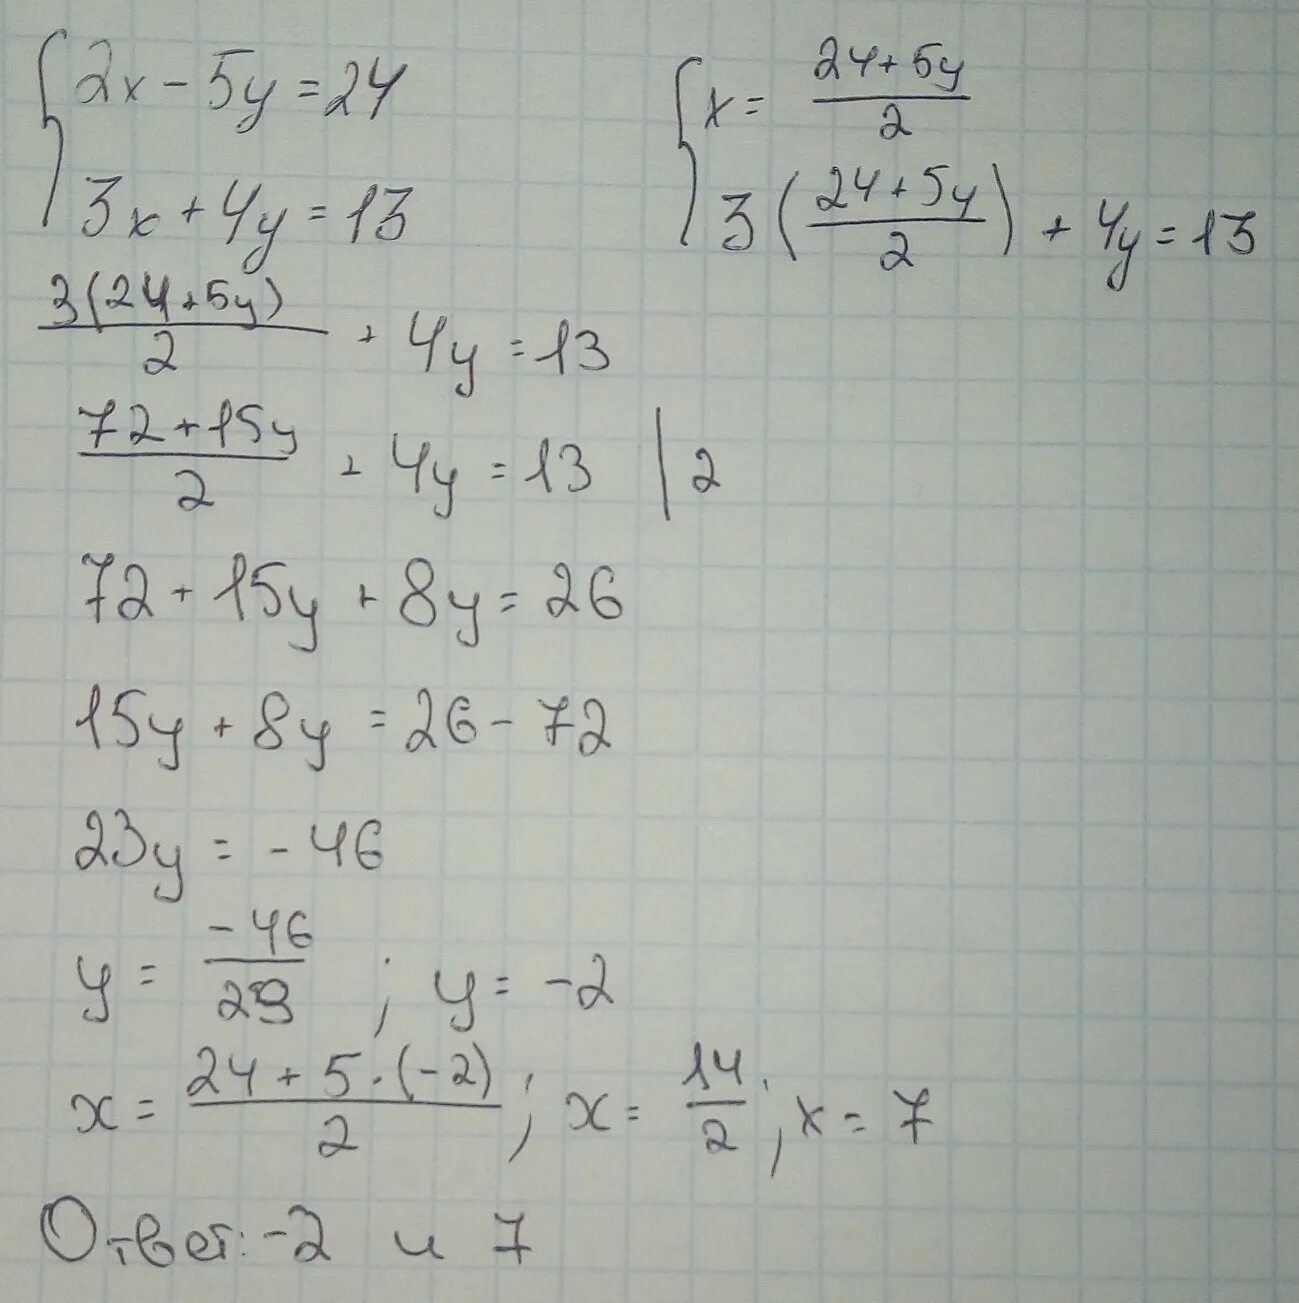 X 1 24 решение. 13,2:24 Решение. (4у+4у-13)+(4у-4у+13). Решите уравнение 13у+15у-24 60. (-1+I) ¹³ решение.